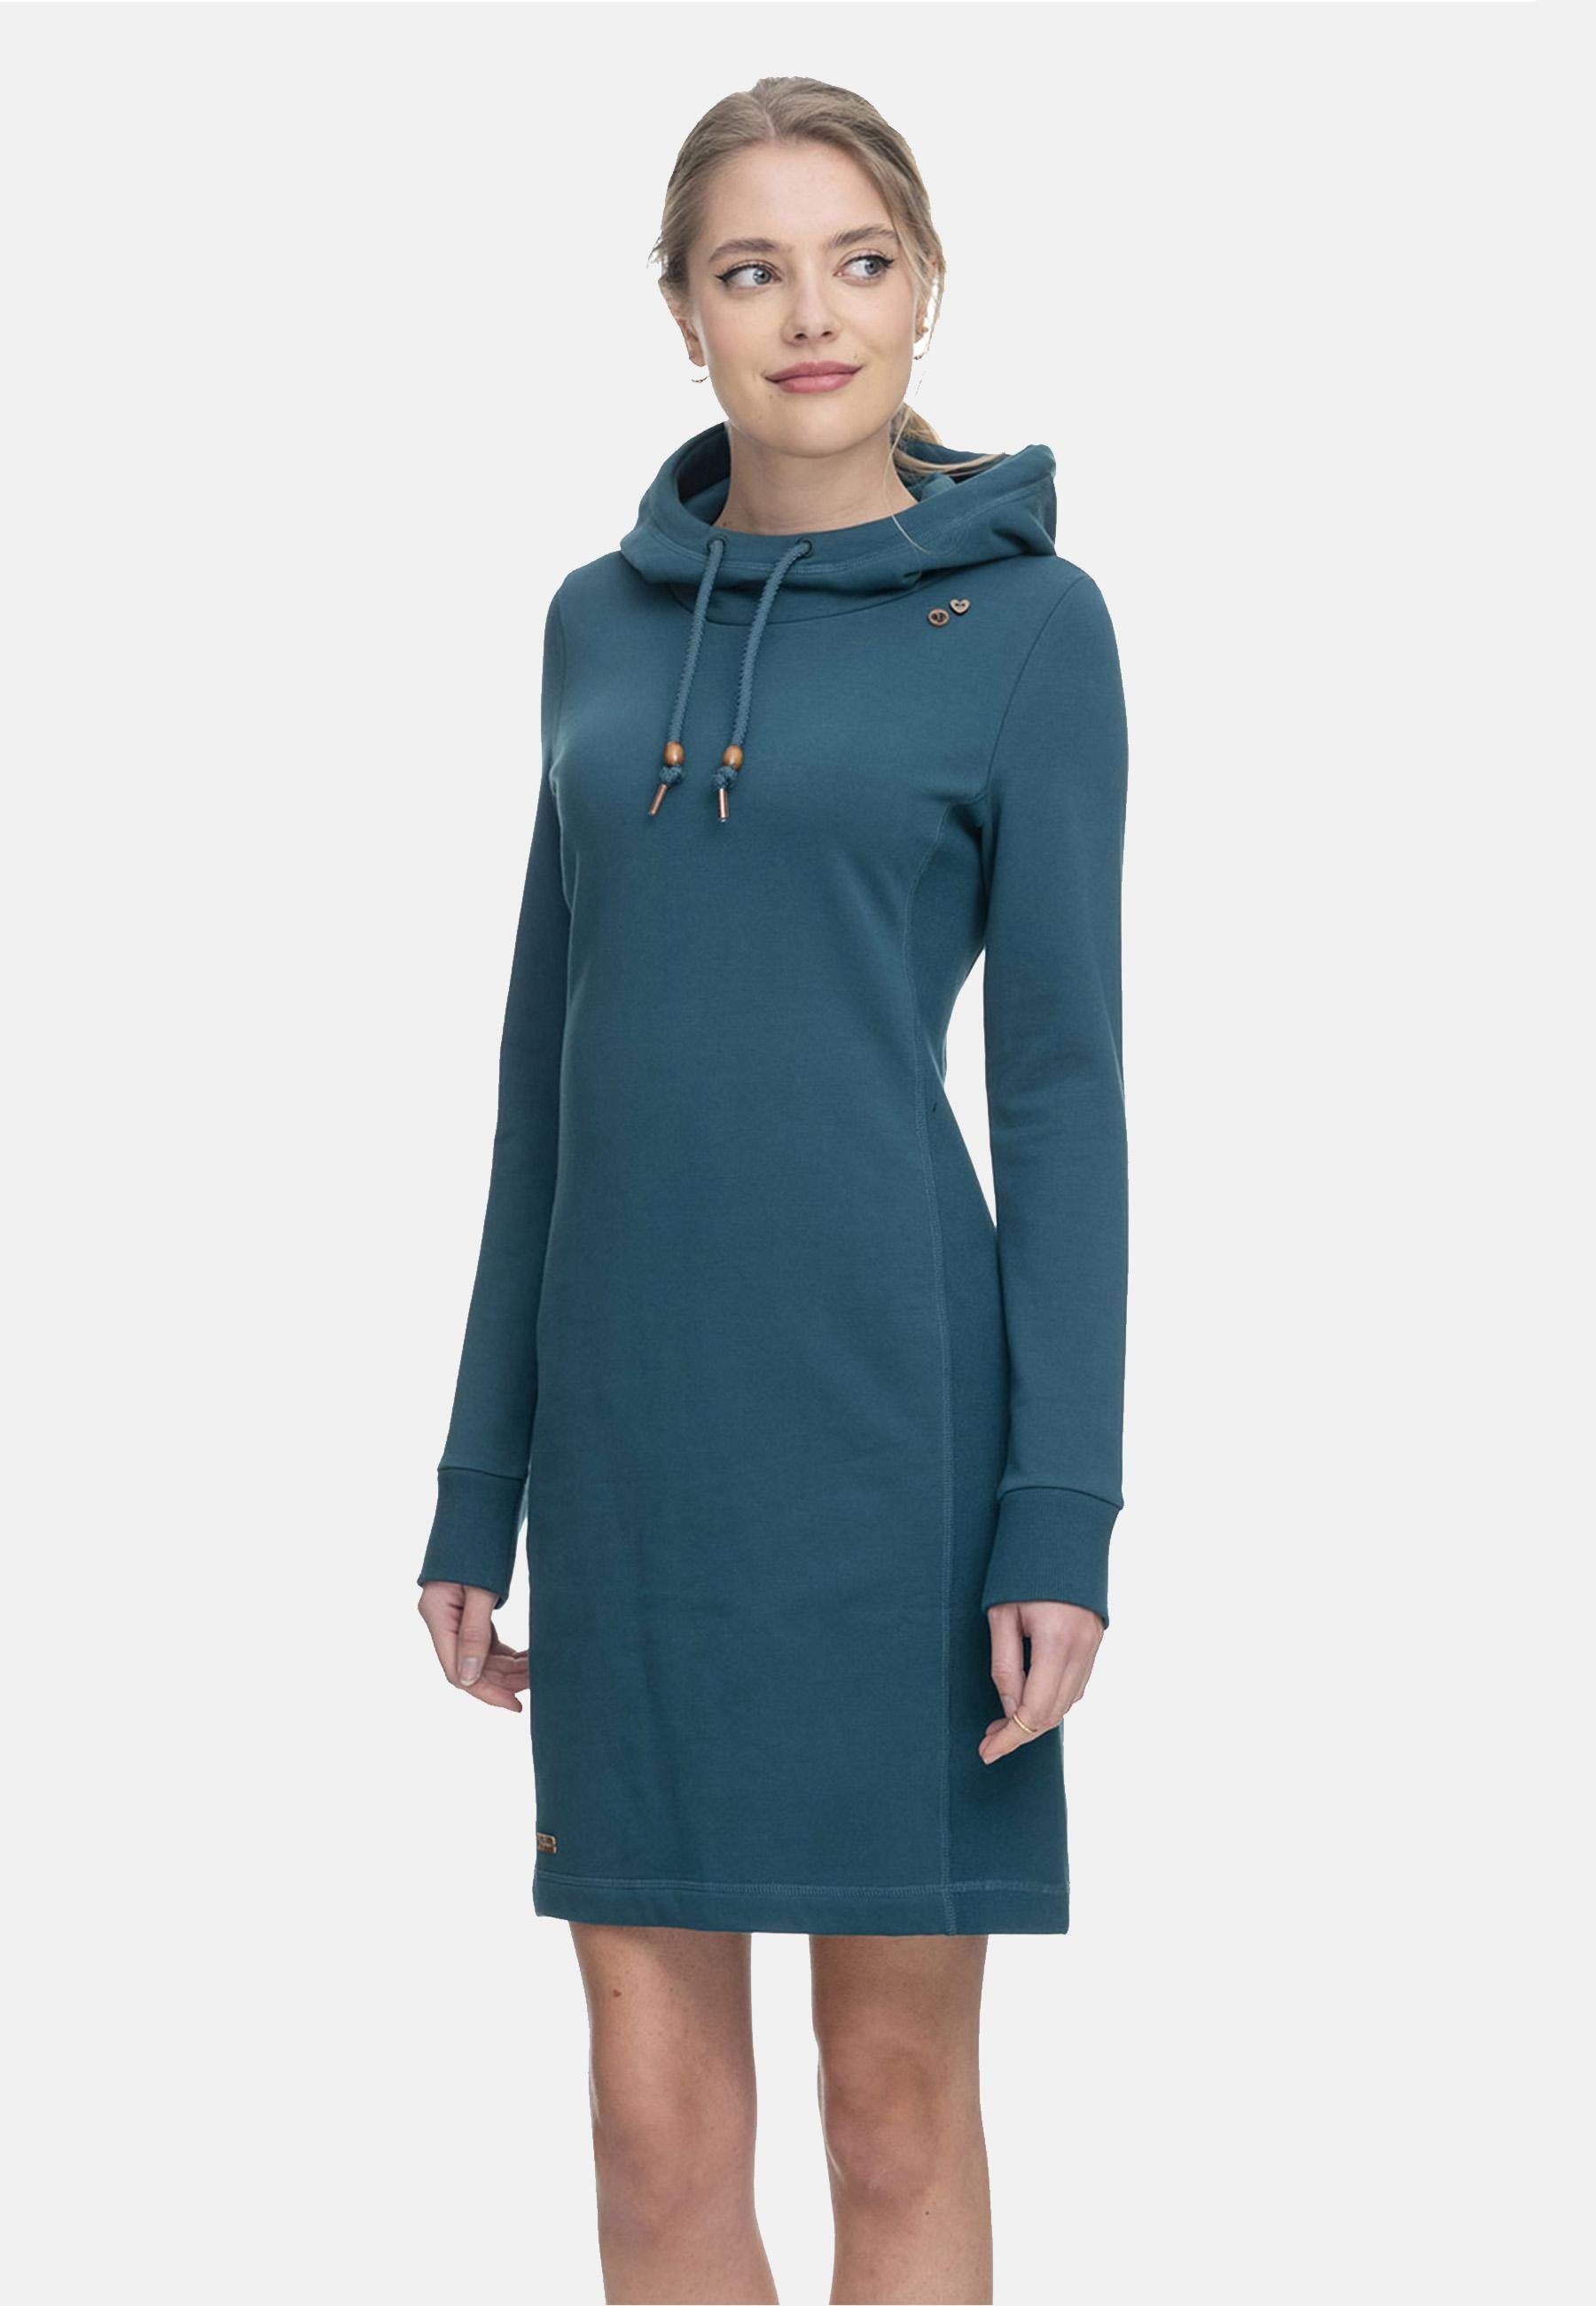 Baumwoll Kapuze Kleid Ragwear Langärmliges dunkelgrün Sabreen Sweatkleid mit